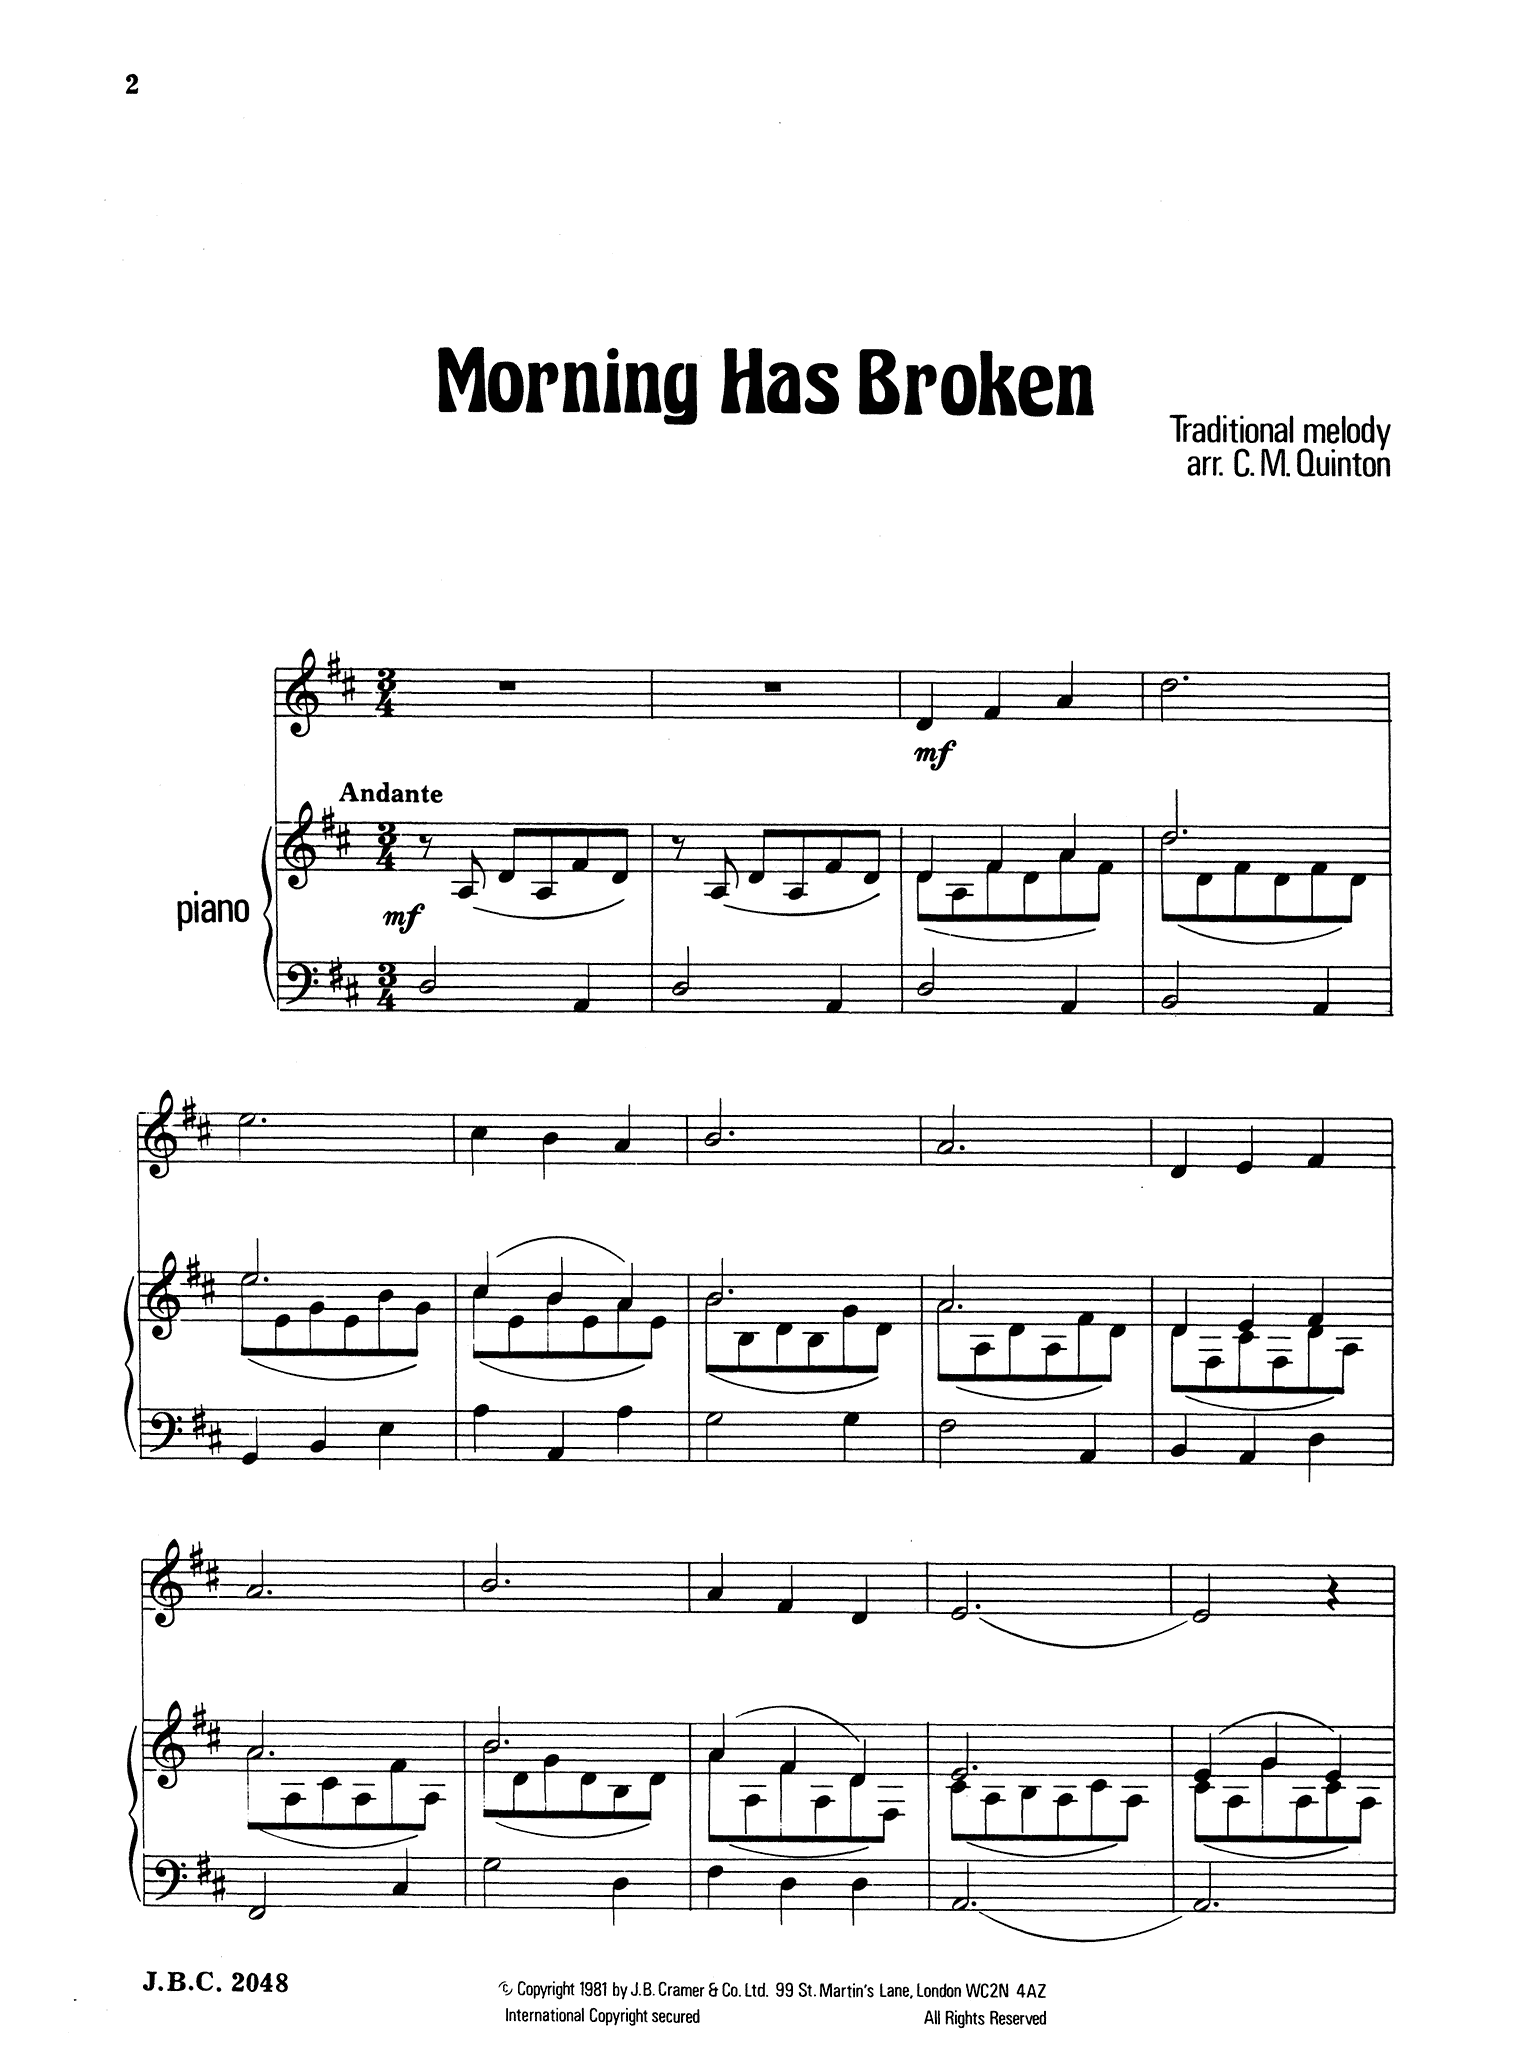 Morning Has Broken hymn clarinet and piano arrangement score